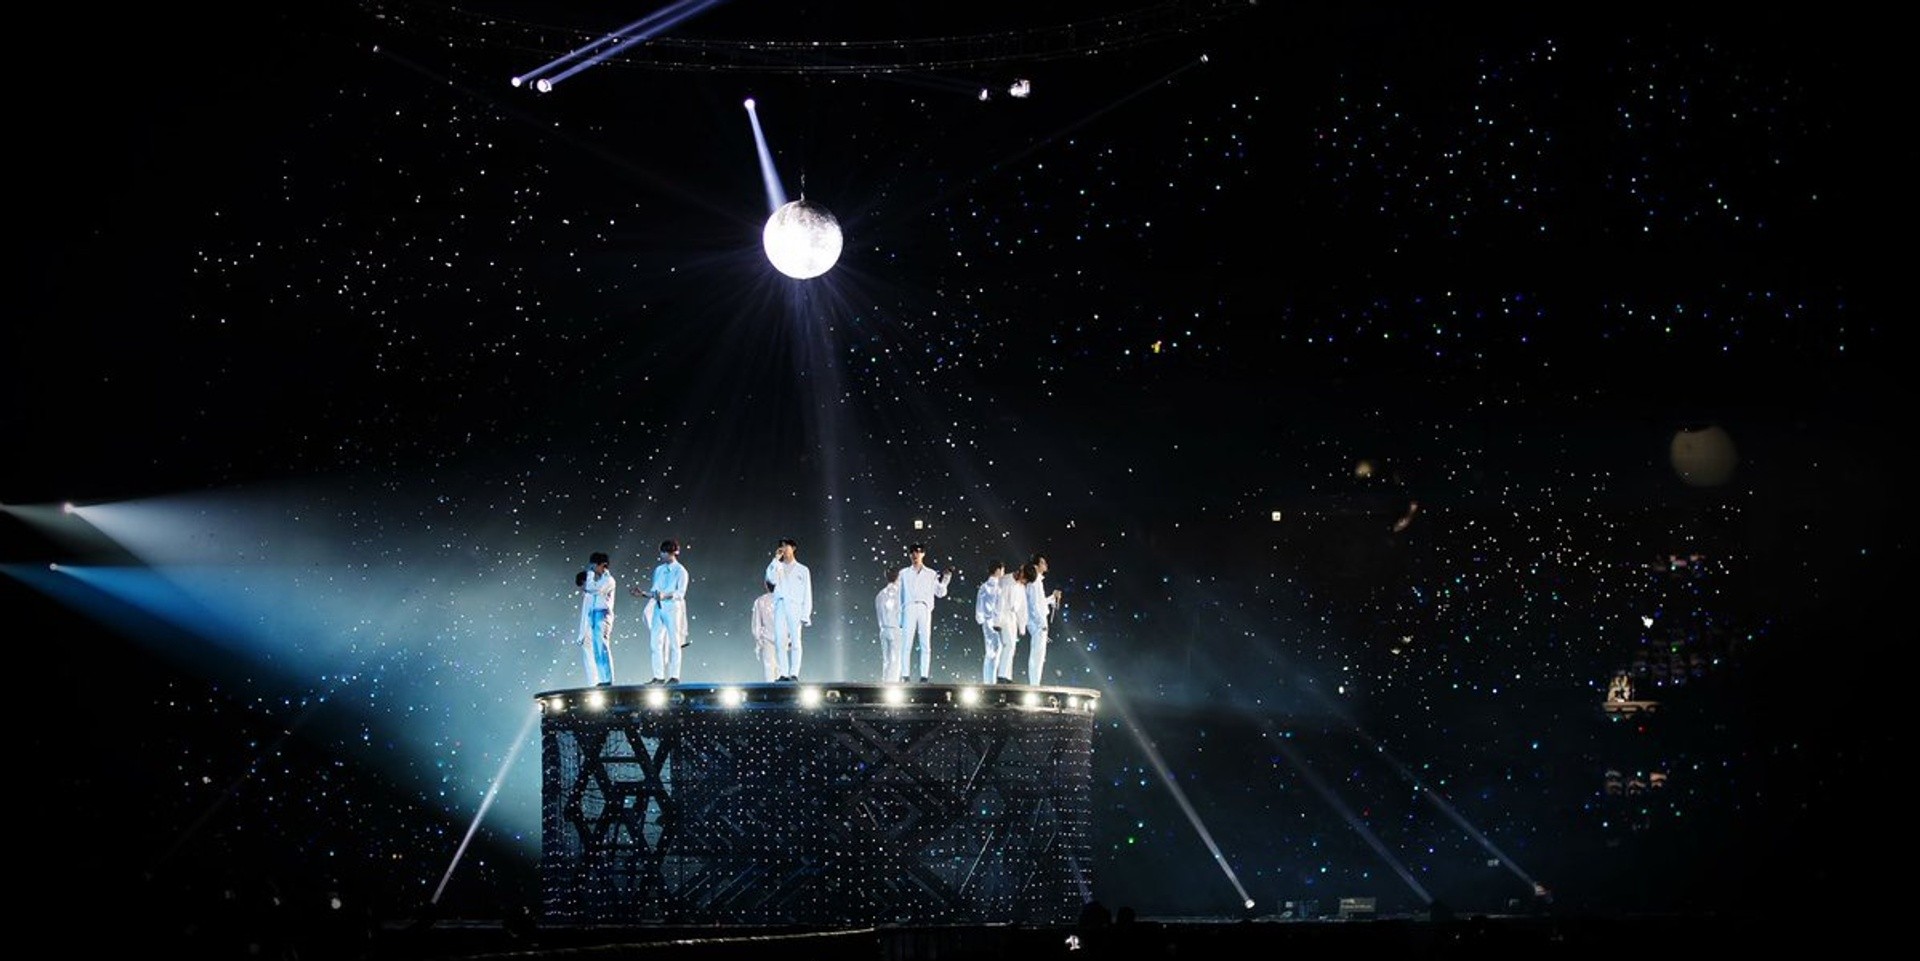 Tears fall as Wanna One bids farewell at final concert - gig report 